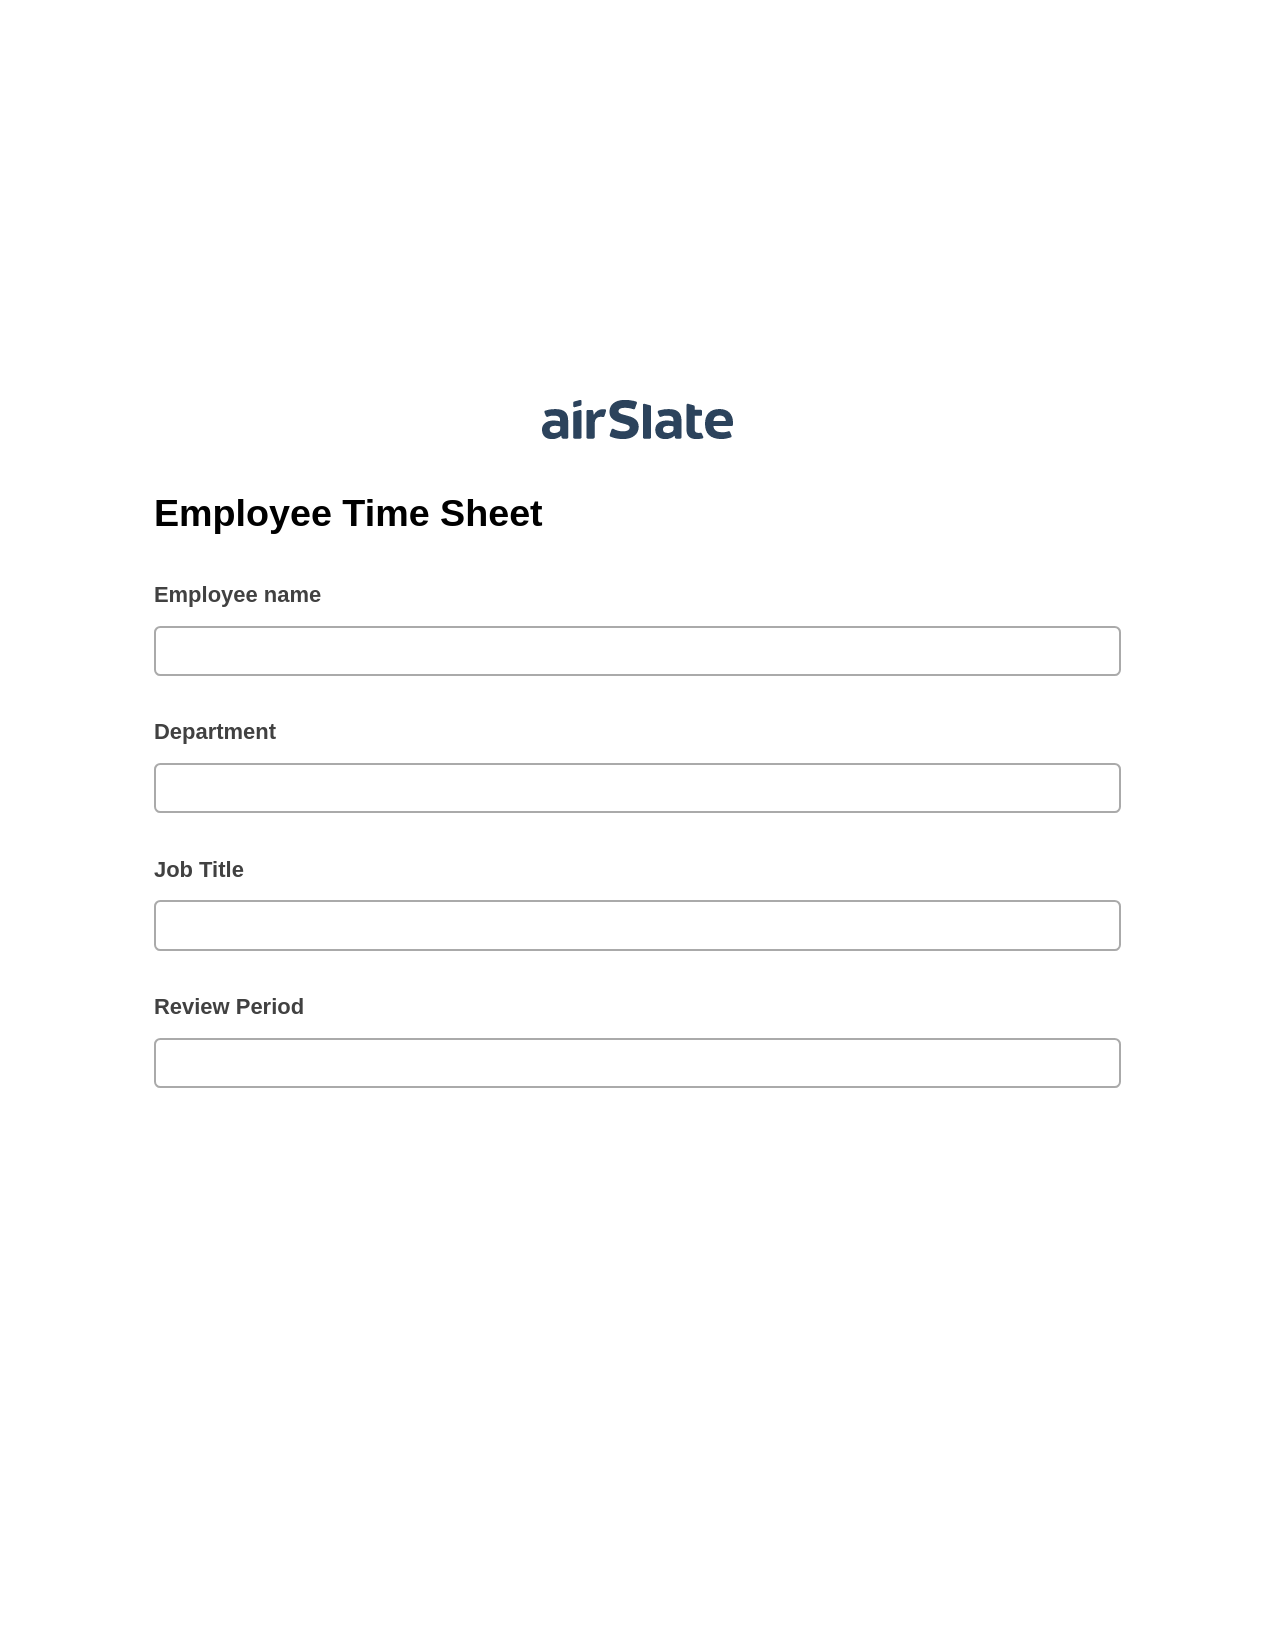 Multirole Employee Time Sheet Pre-fill from Salesforce Records Bot, Create slate addon, Slack Notification Postfinish Bot